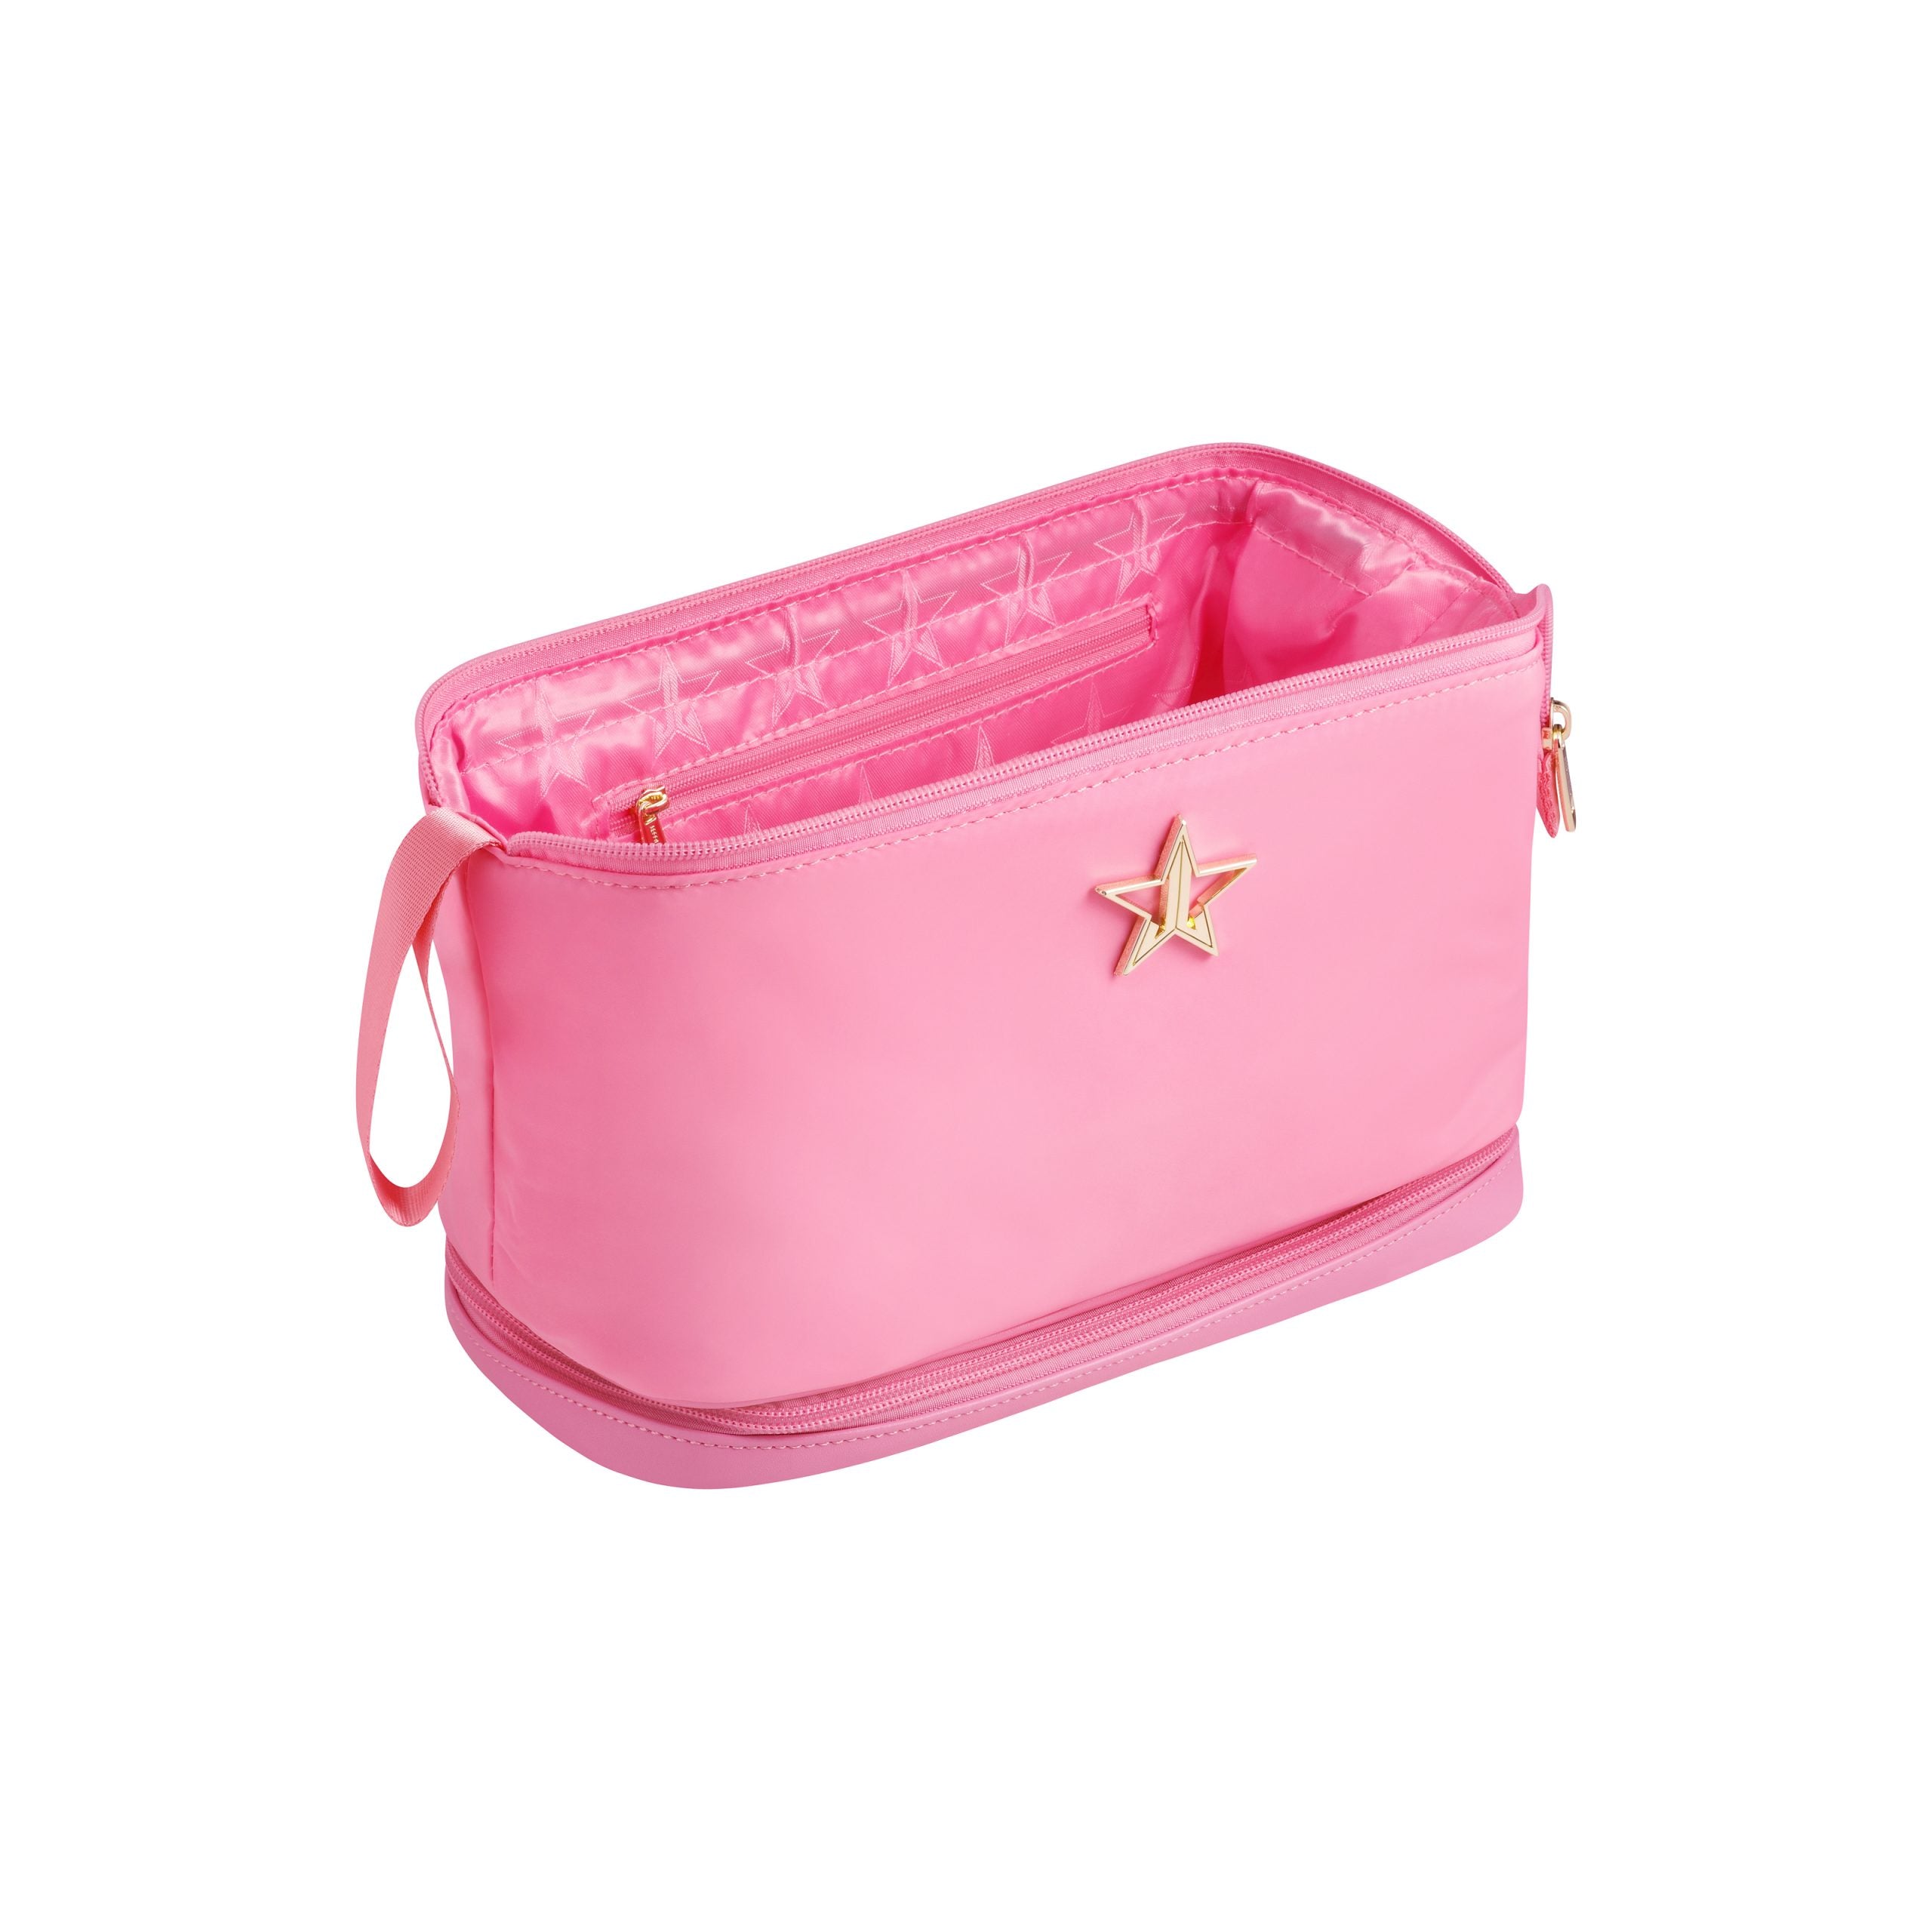 Jeffree Star Cosmetics Purple Cosmetic Bags | Mercari